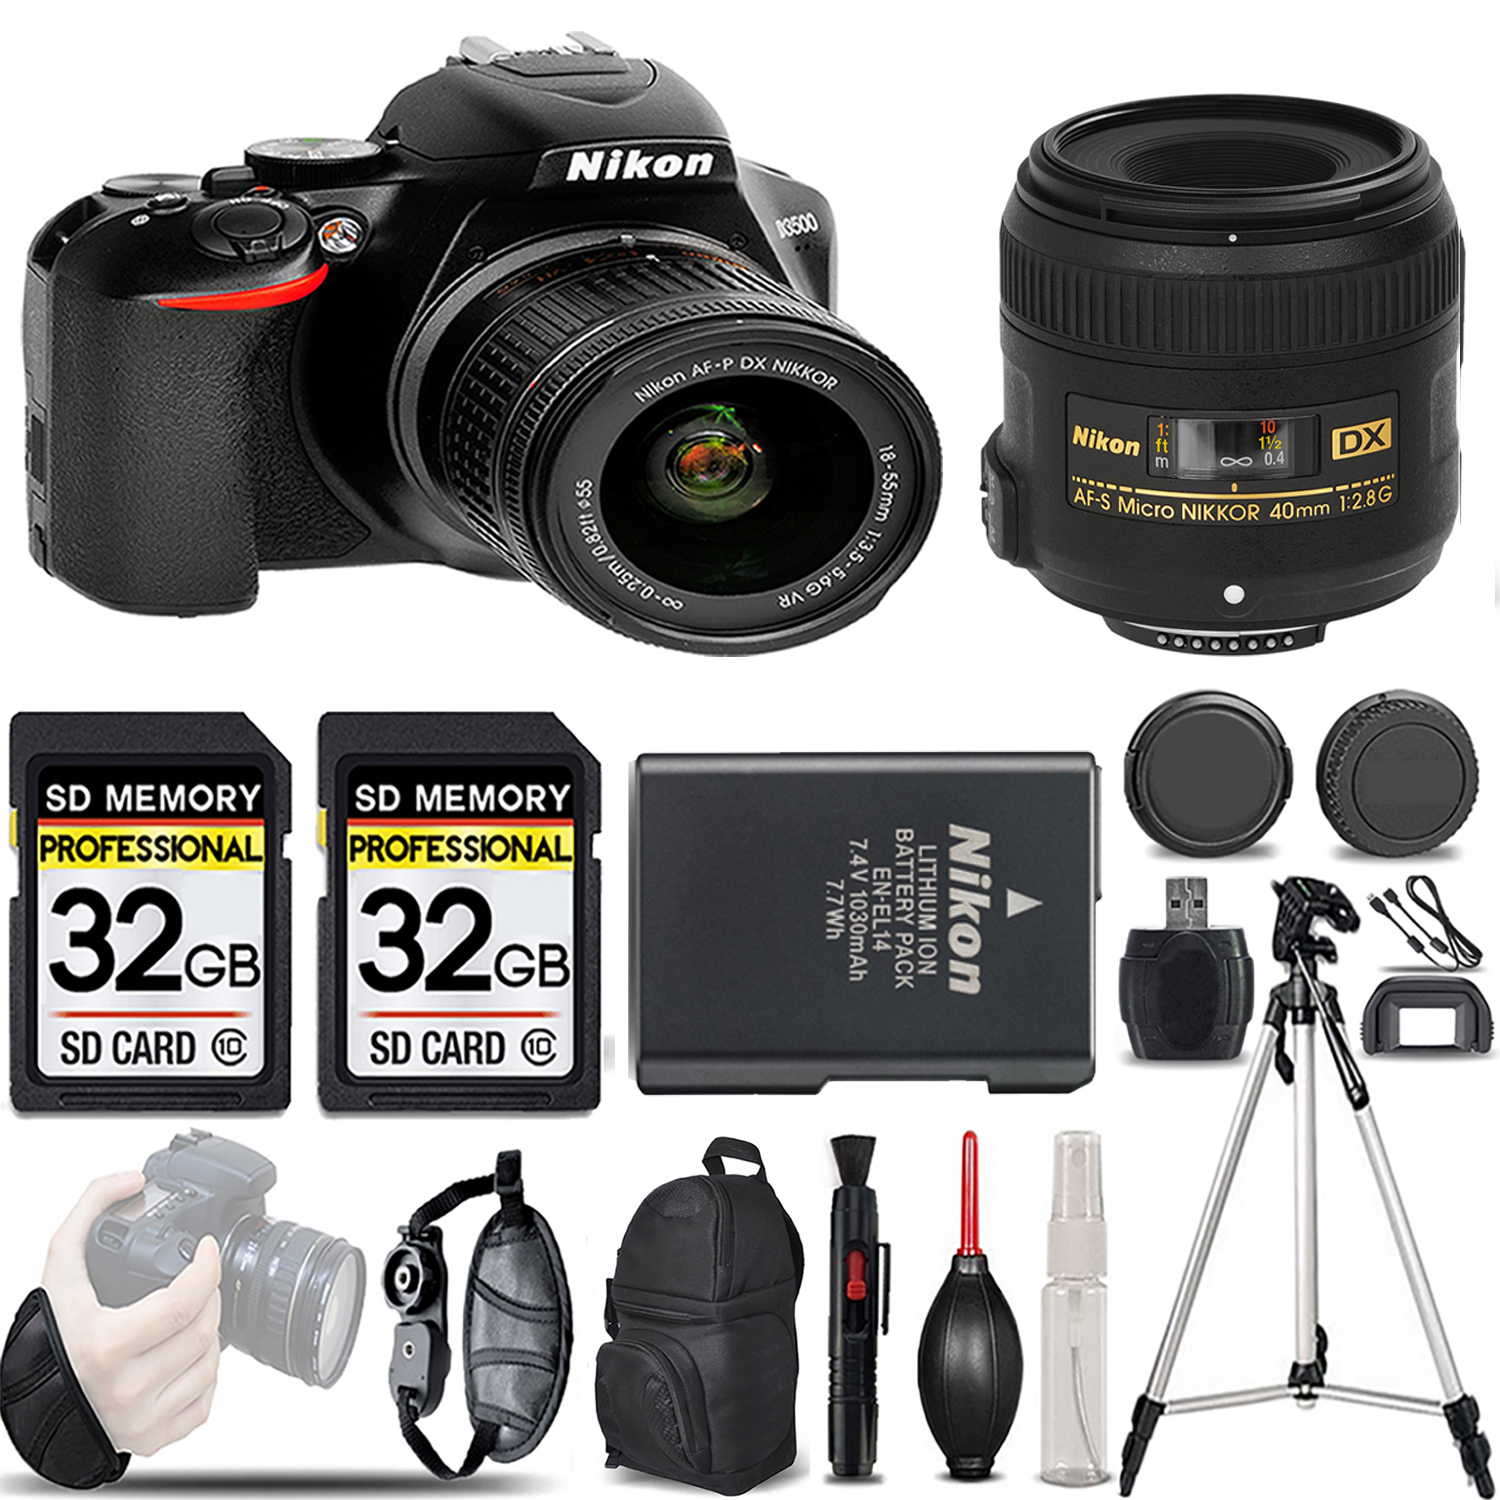 D3500 DSLR Camera with 18-55mm Lens + 40mm Lens - LOADED KIT *FREE SHIPPING*